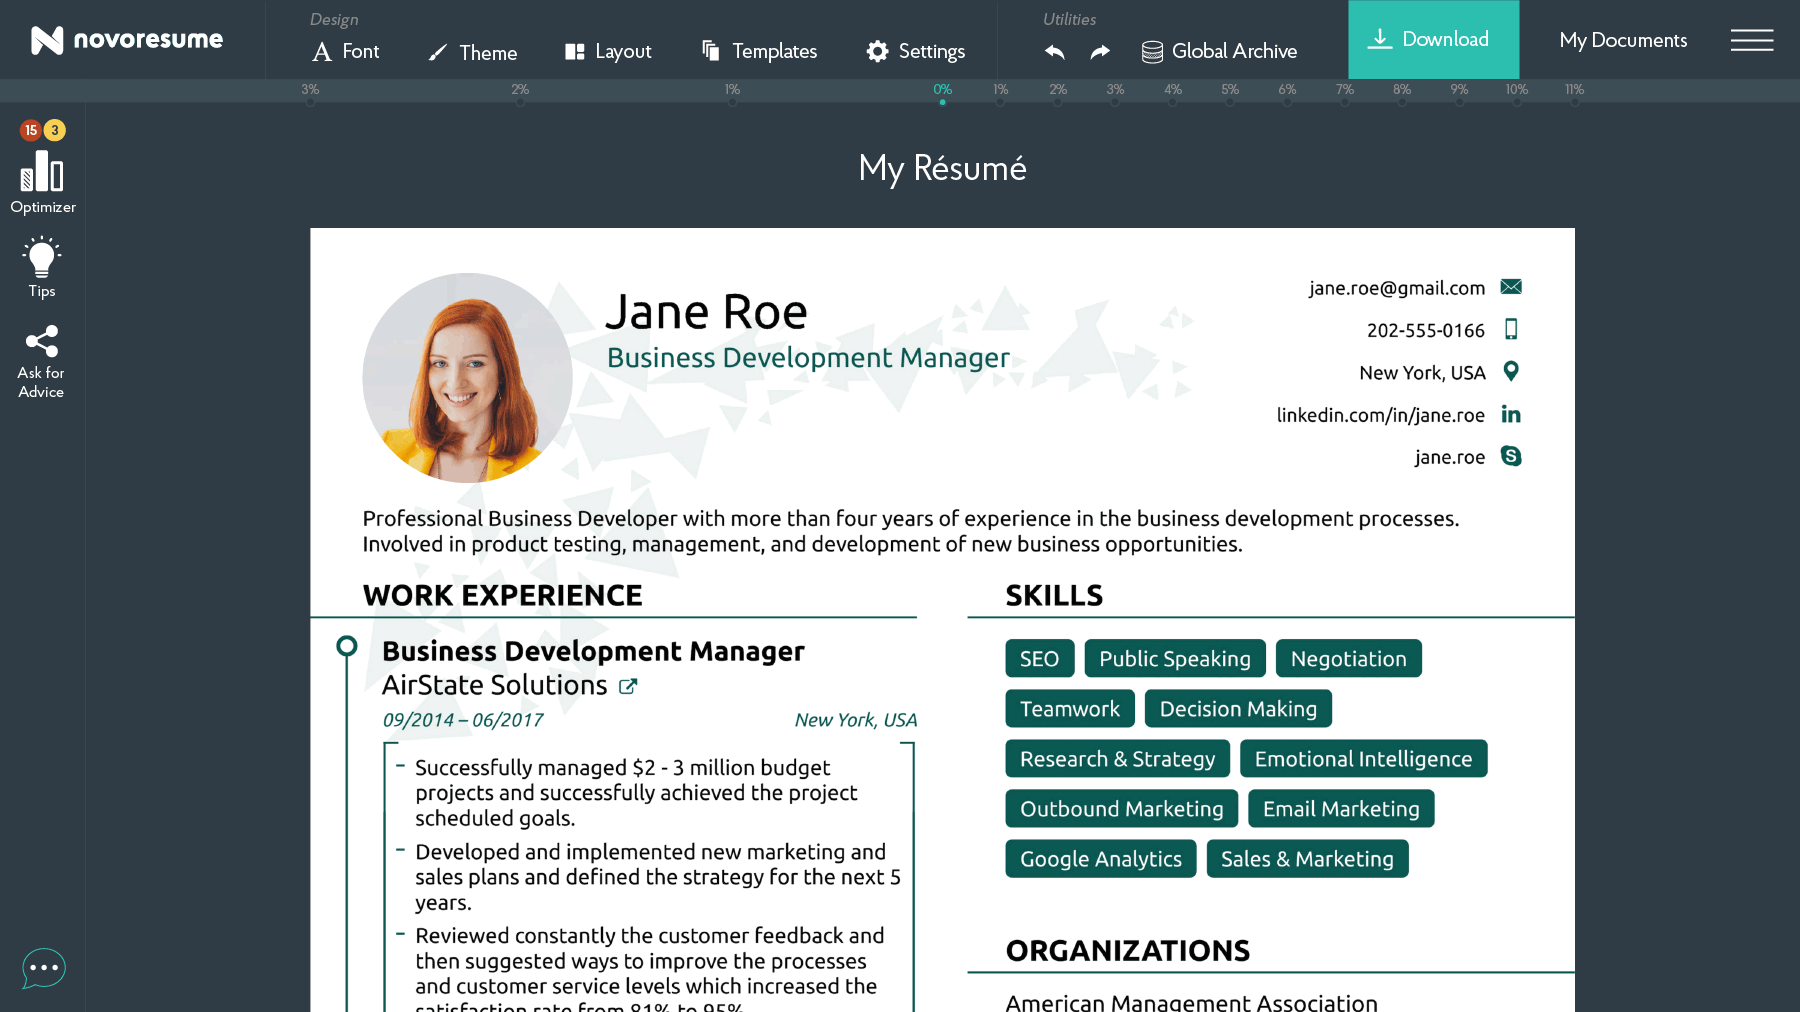 Make A Resume For Free Resume Builder make a resume for free|wikiresume.com